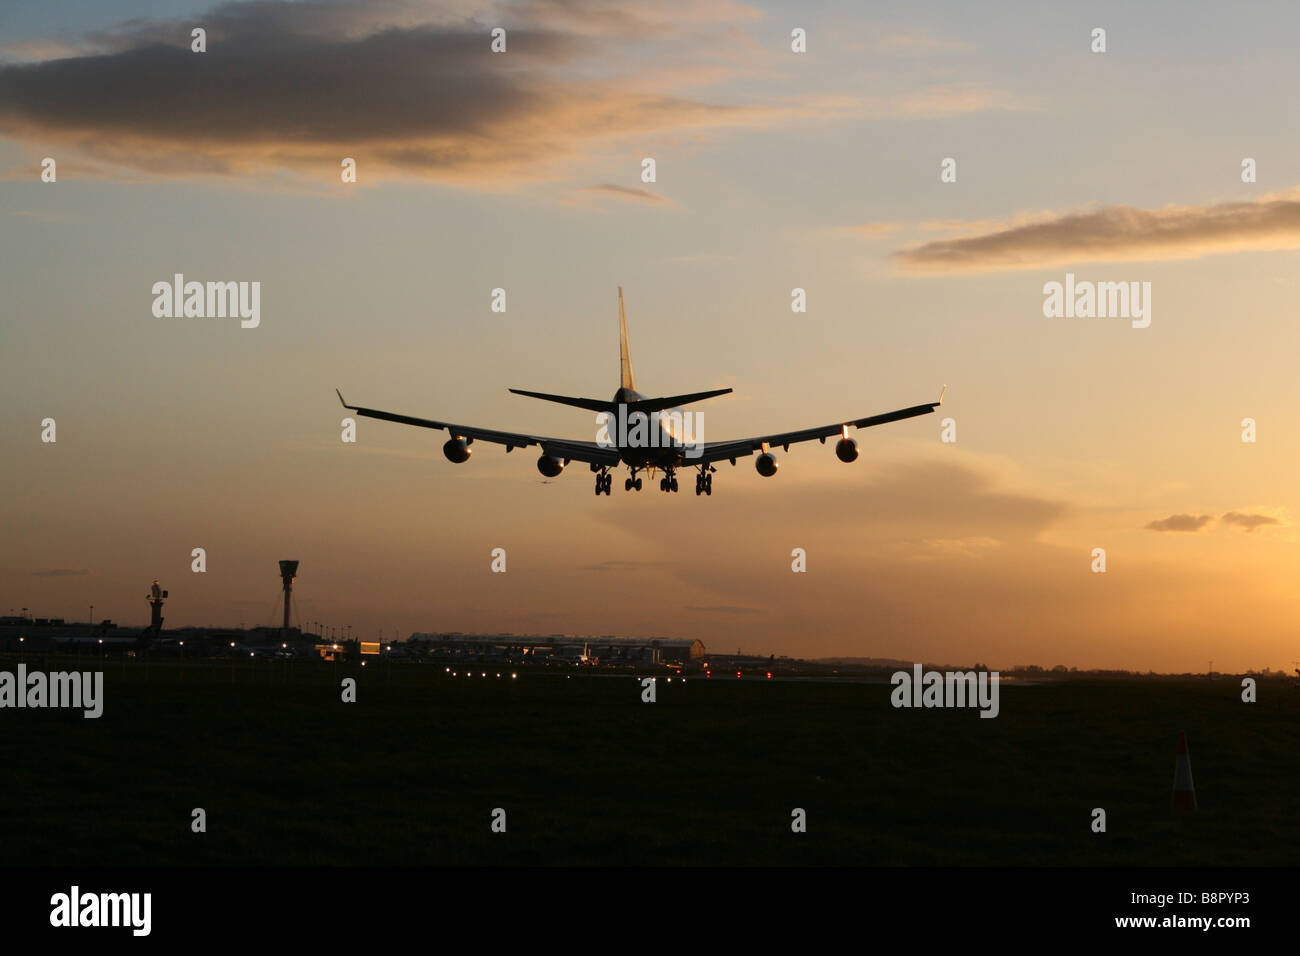 747 Landing at airport Stock Photo